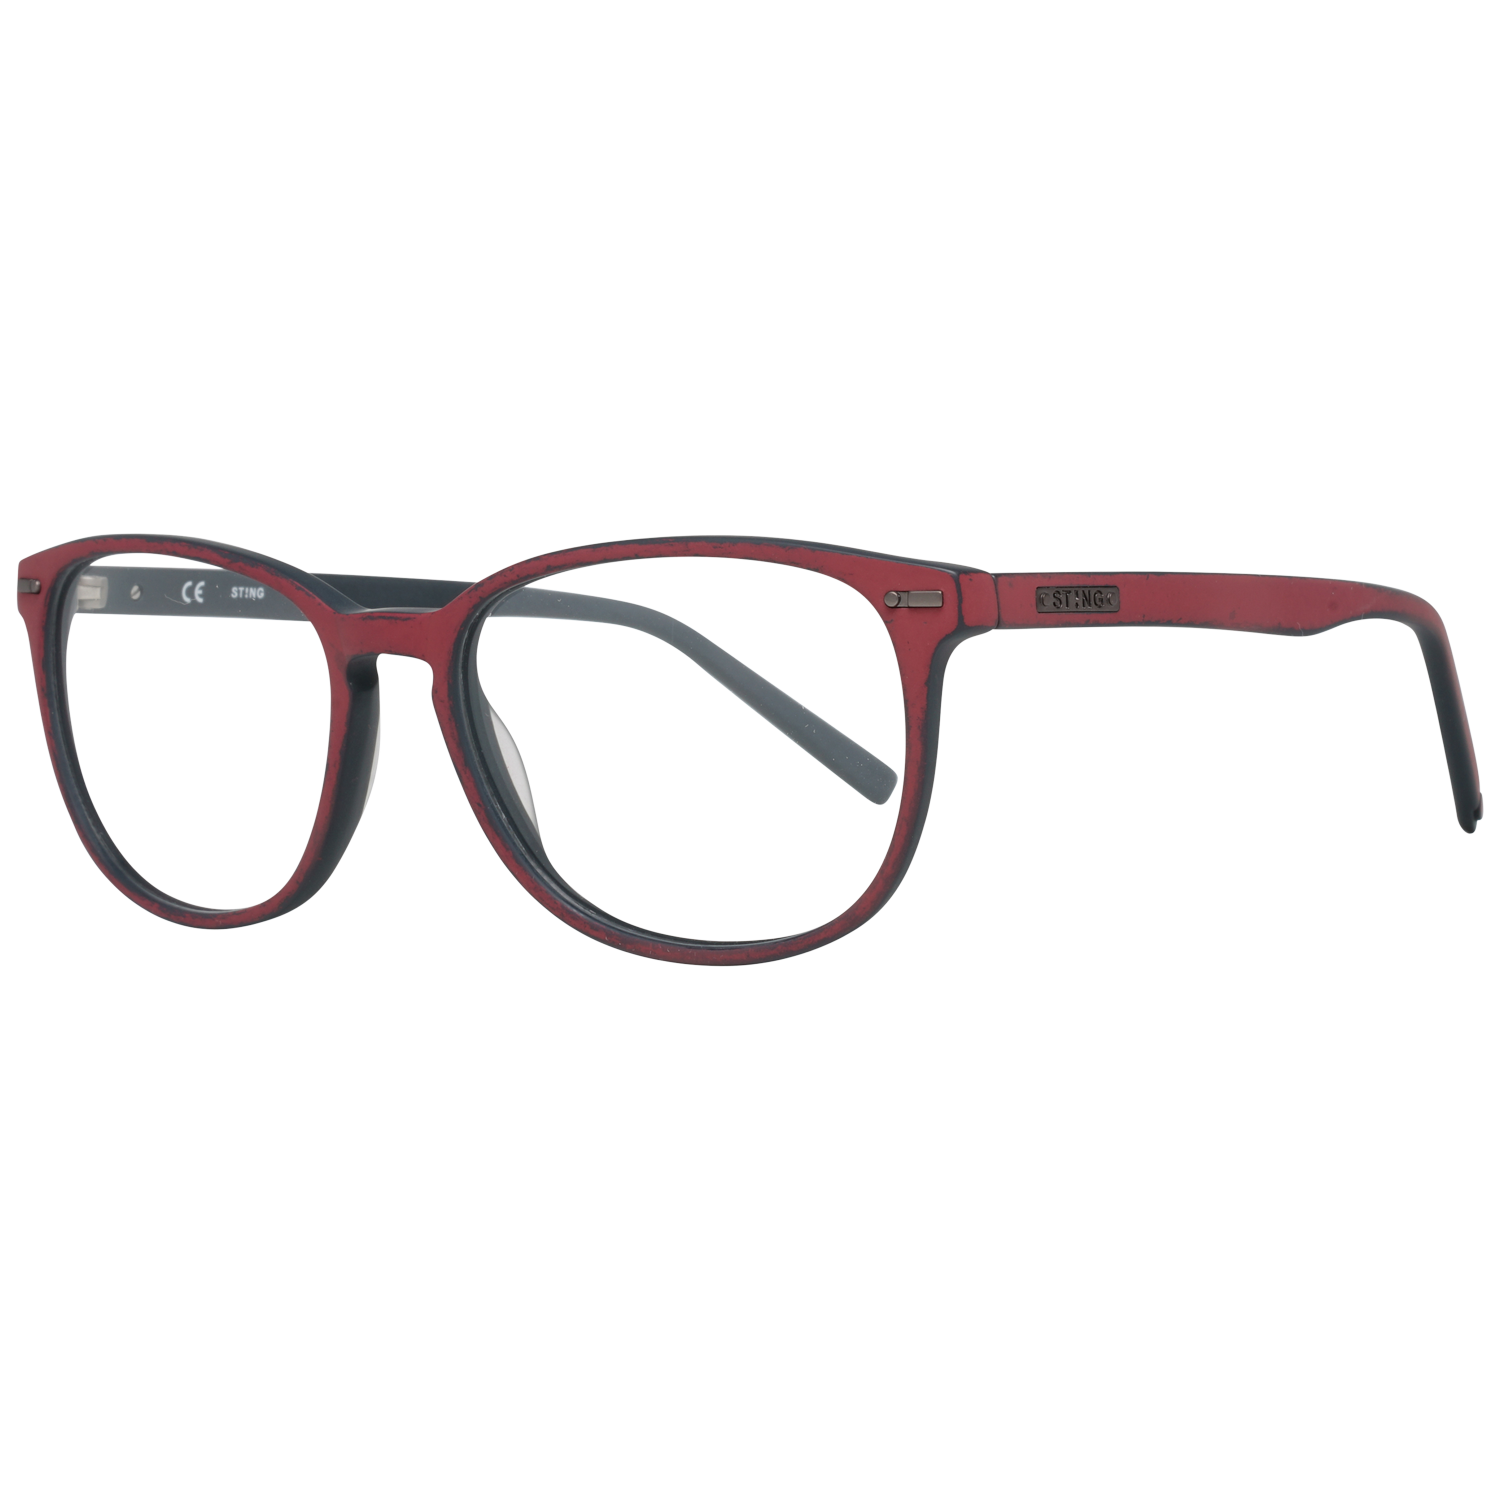 Sting Frames Sting Optical Frame VST040 6HTM 53 Eyeglasses Eyewear UK USA Australia 